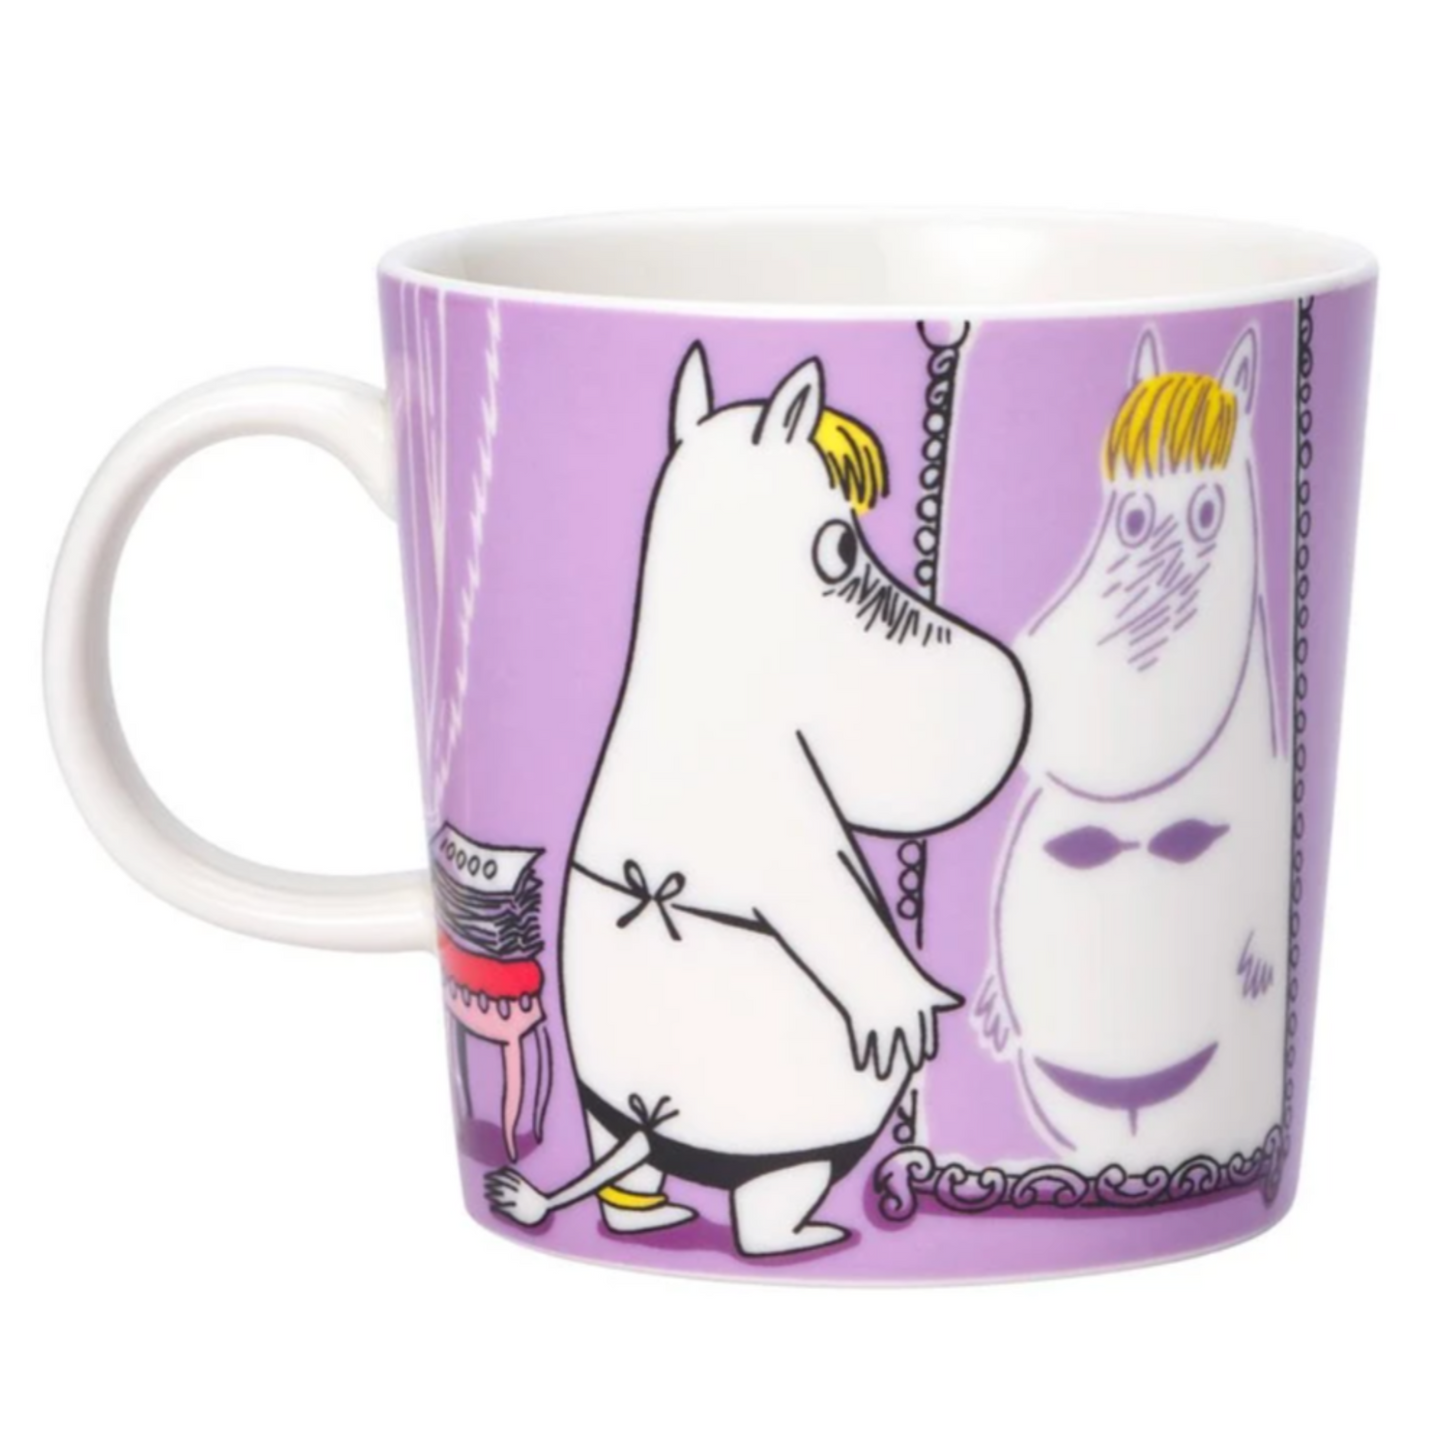 Moomin Mug by Arabia, Snorkmaiden (4580234723393)